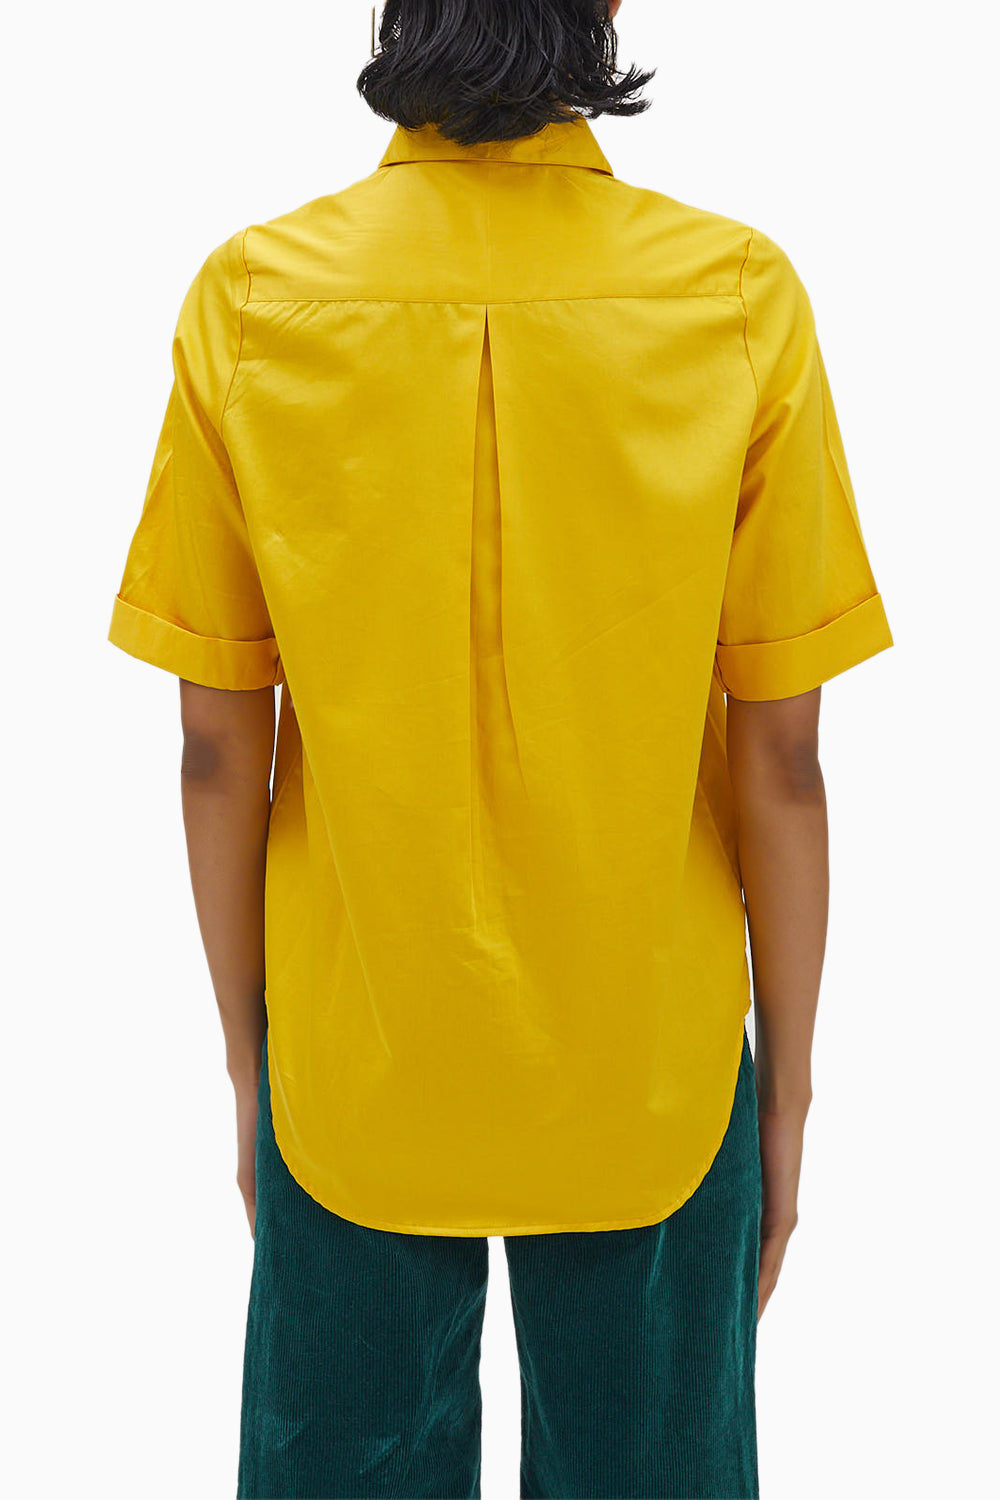 Canary Yellow Emerald Pocket Swarovski Shirt